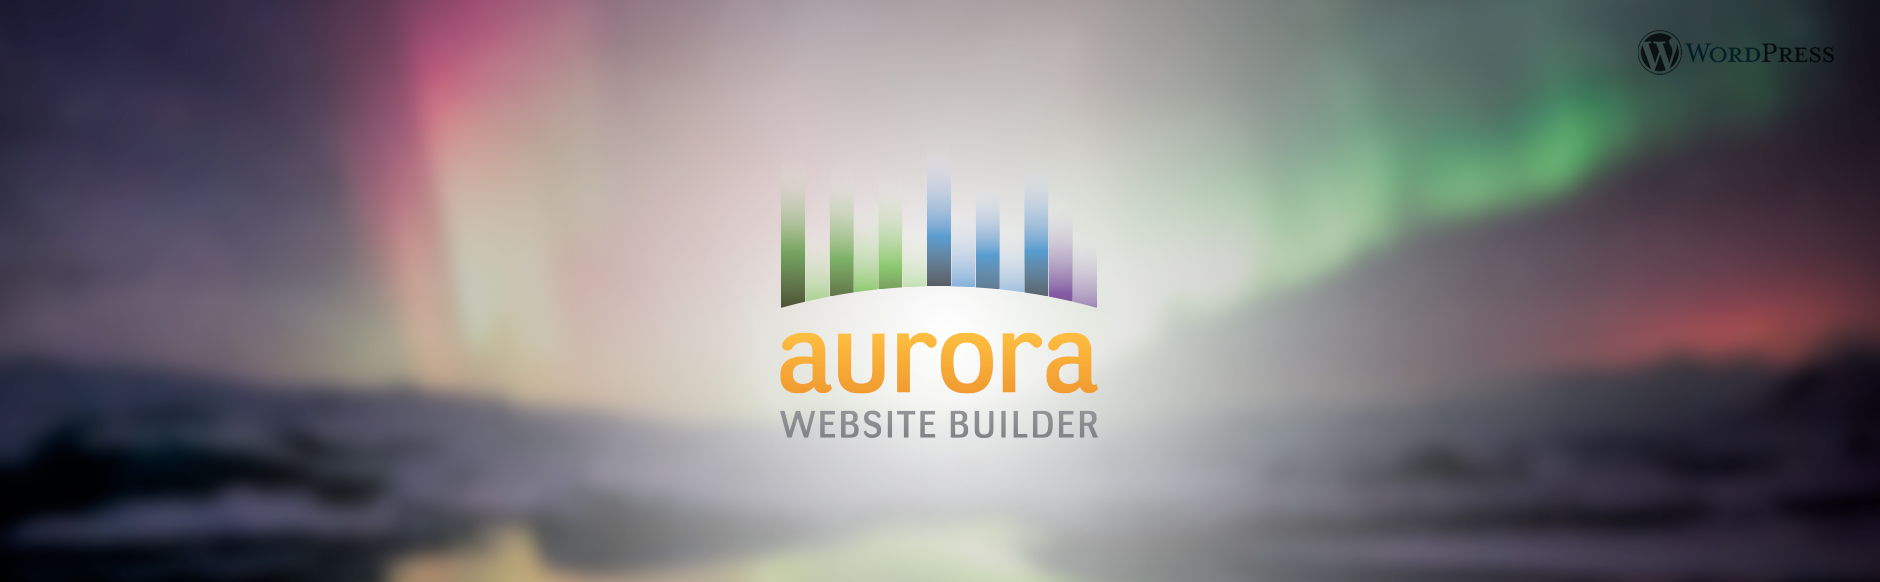 Aurora: Powered by WordPress